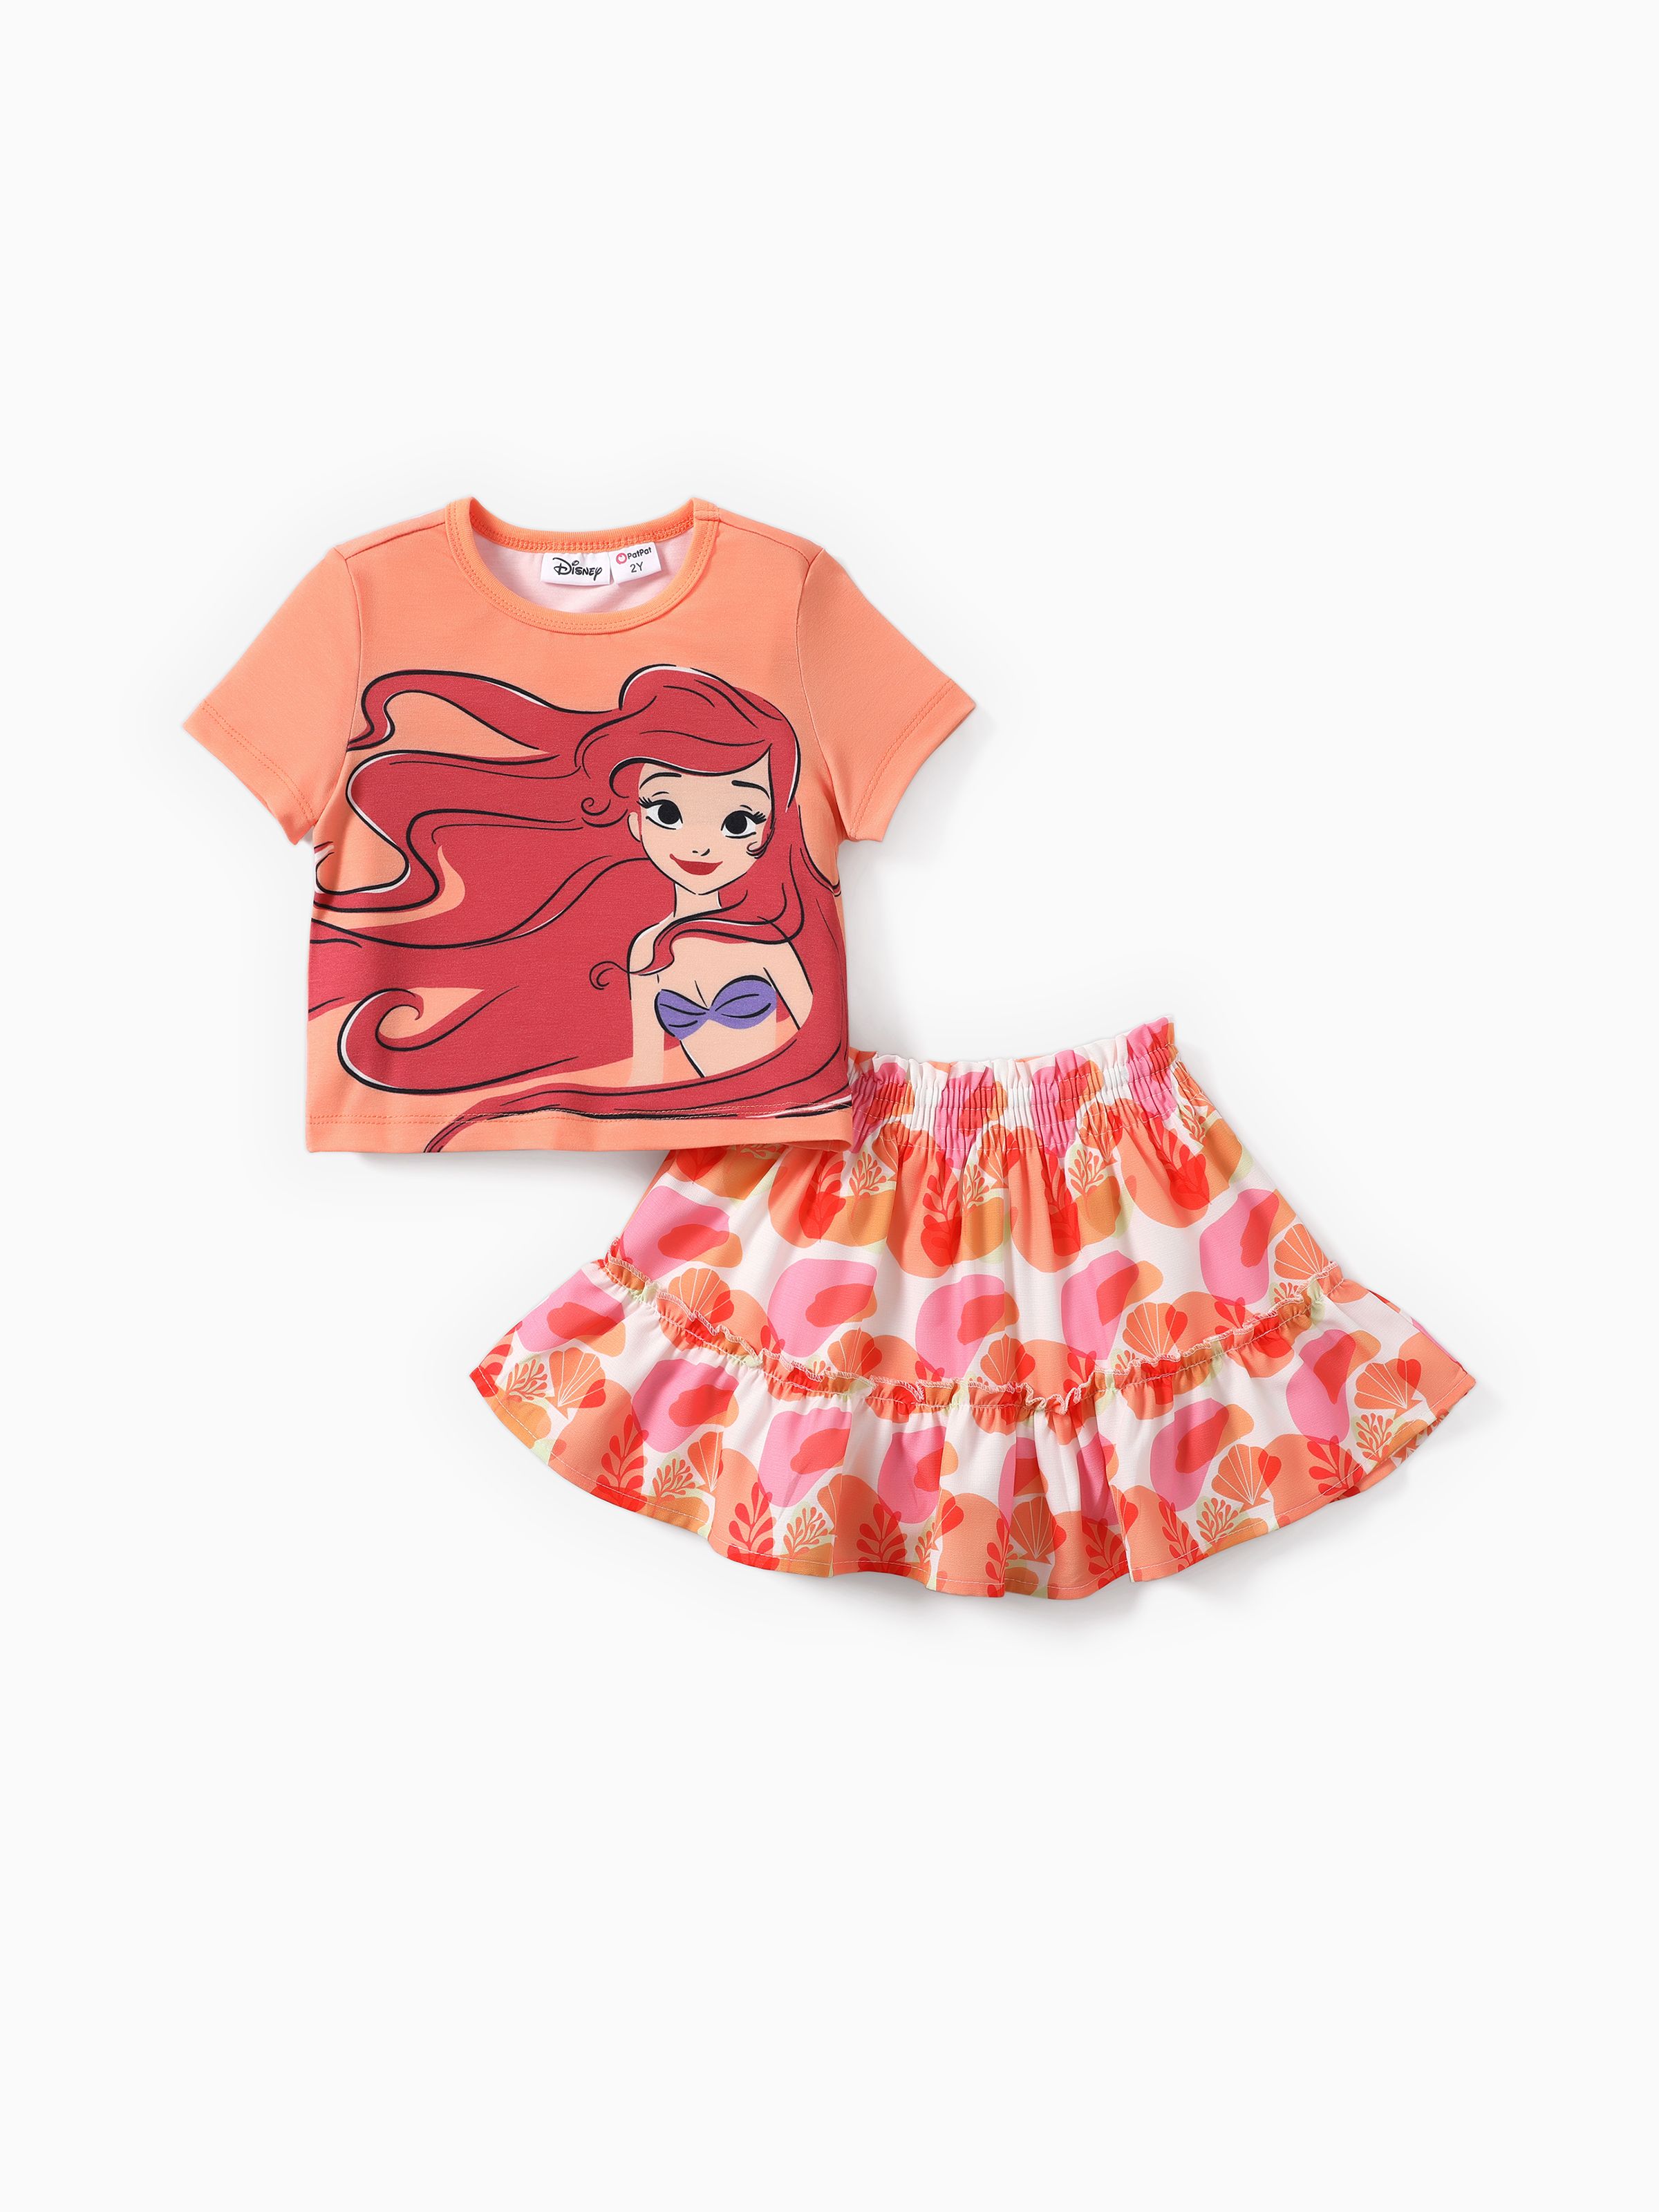 

Disney Princess Moana/Ariel 2pcs Toddler Girls Naia™ Character Print T-shirt with Pattern All-over with Ruffled Skirt Set